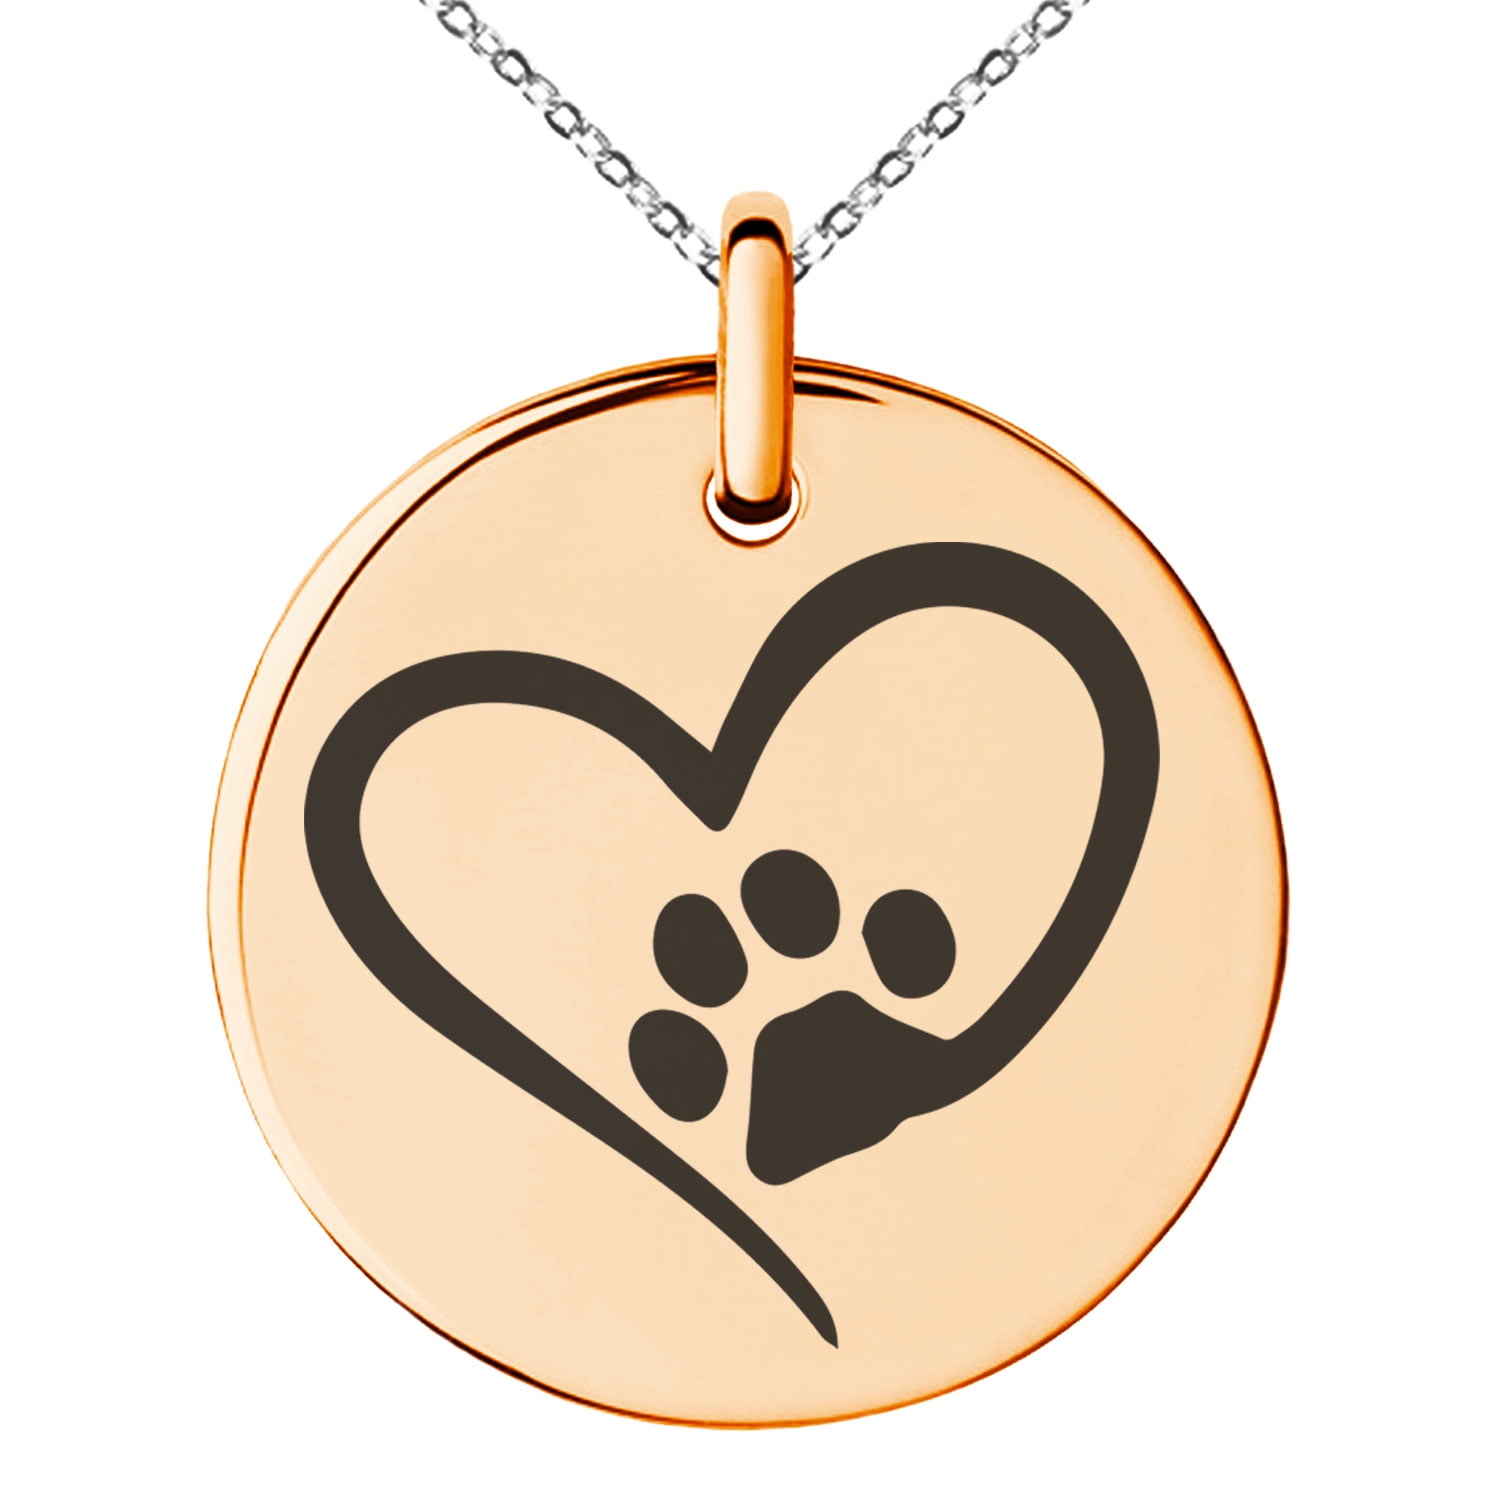 Handmade enamel charm necklace Dog heart pendant necklace Cute dog charm necklace